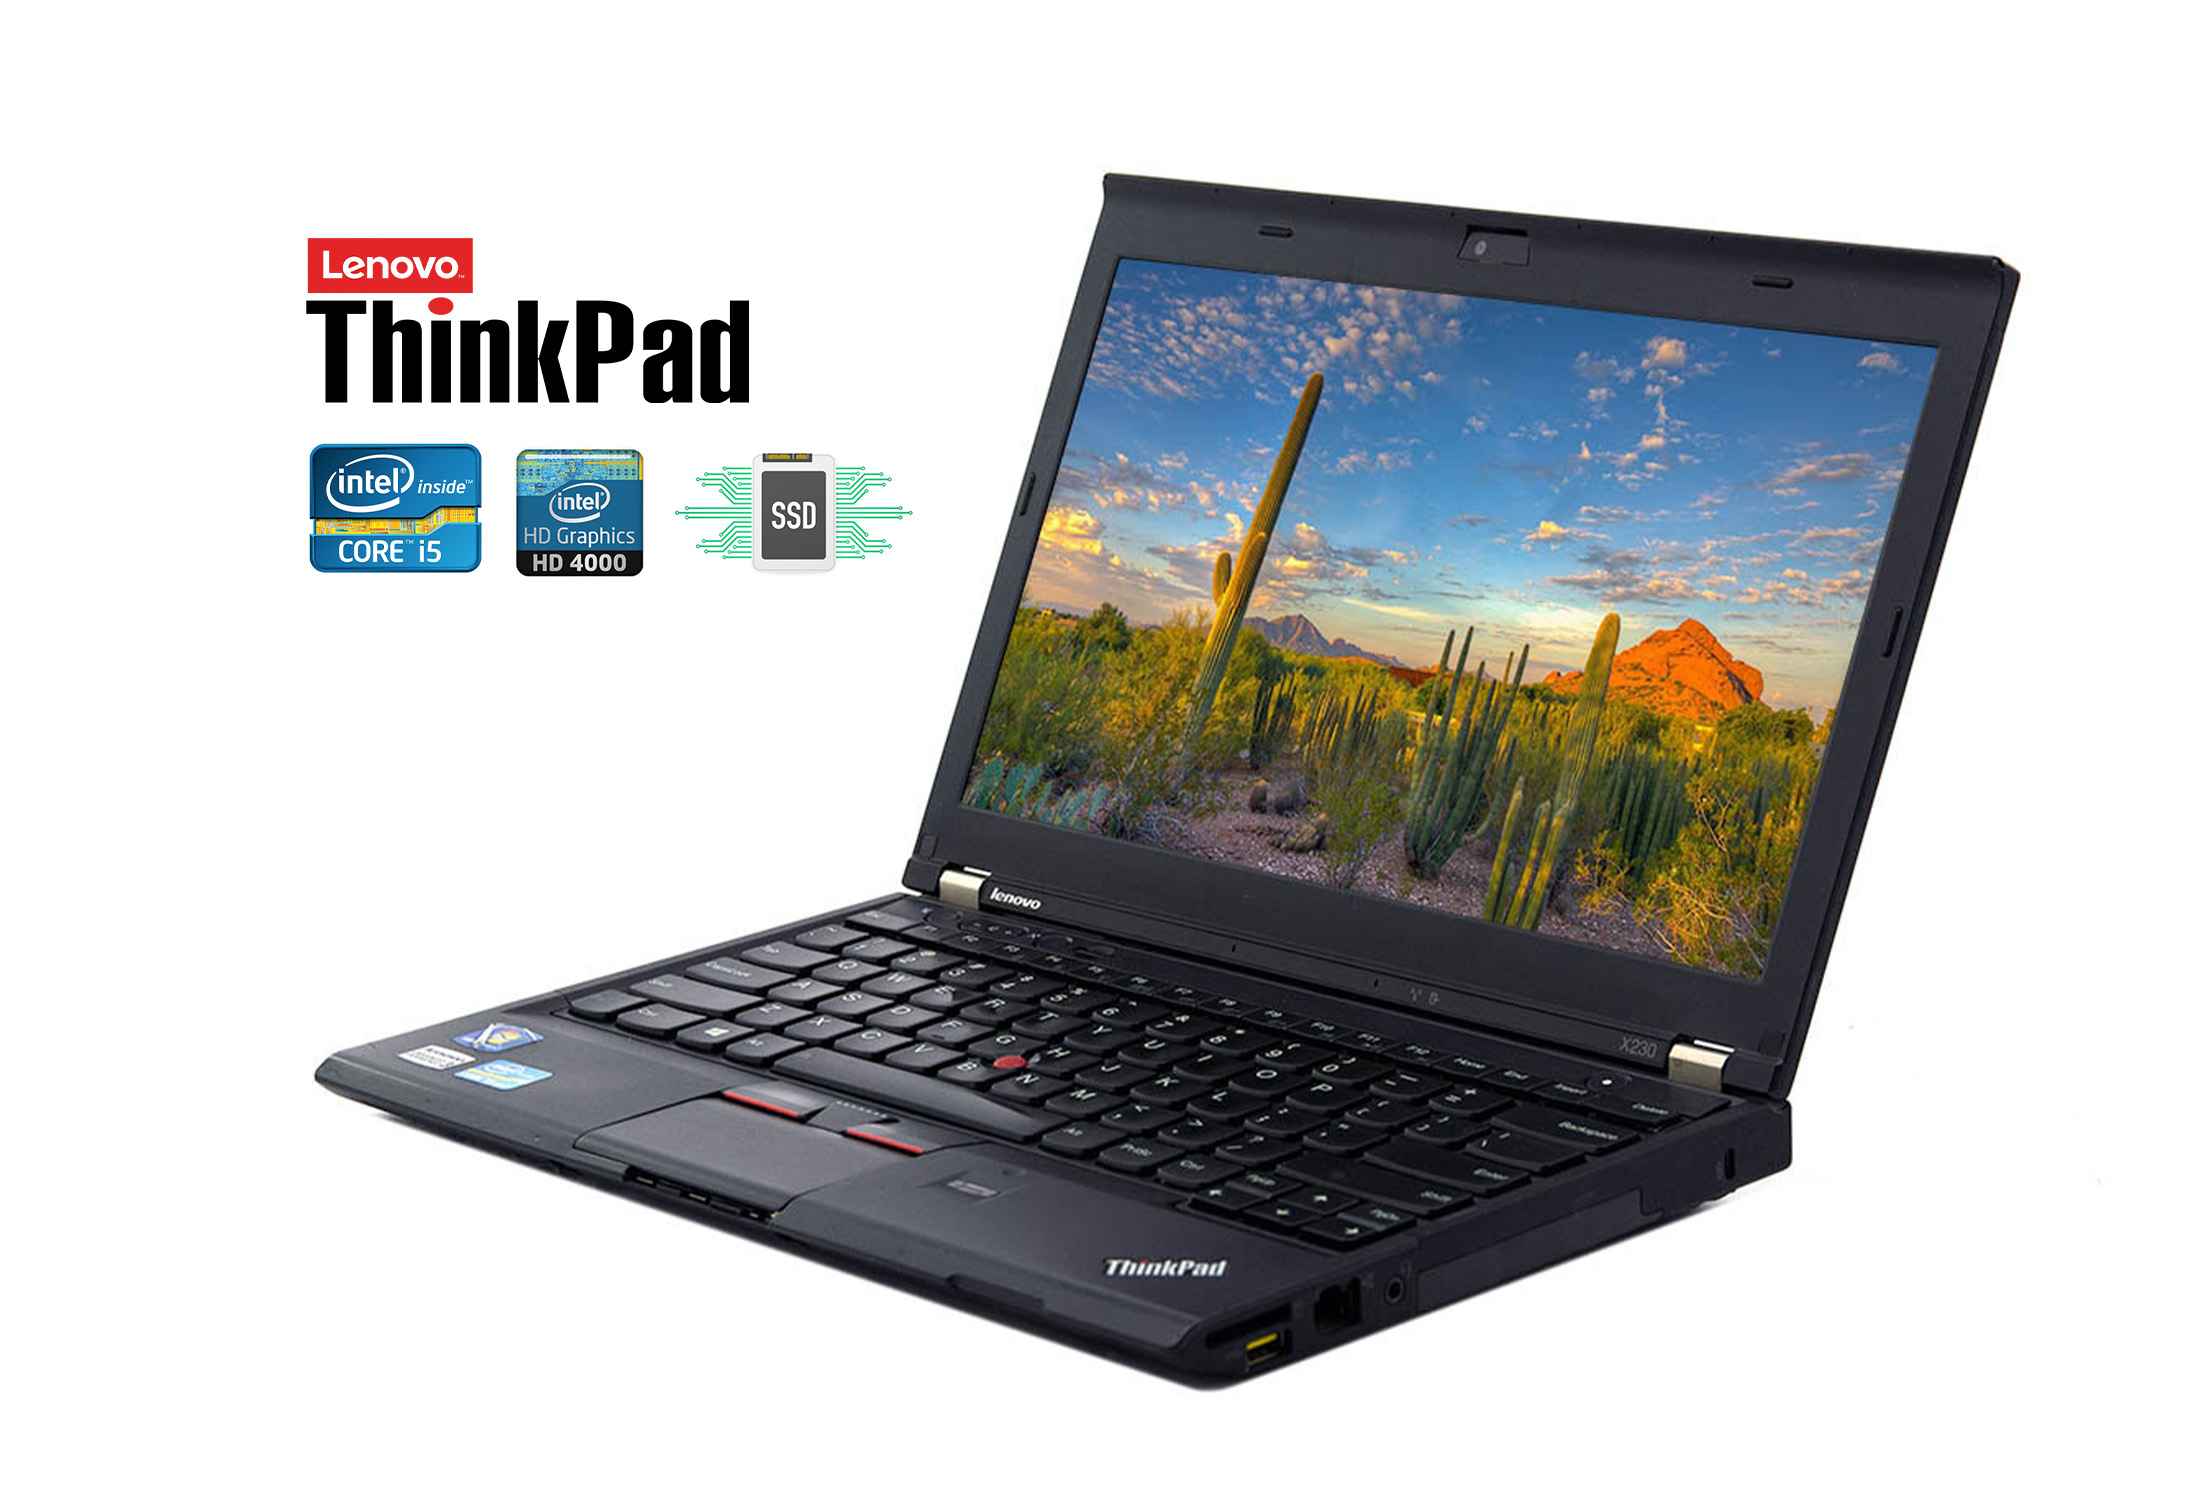 Lenovo Thinkpad X230 core i5-3320M 8GB RAM 128GB SSD Camera